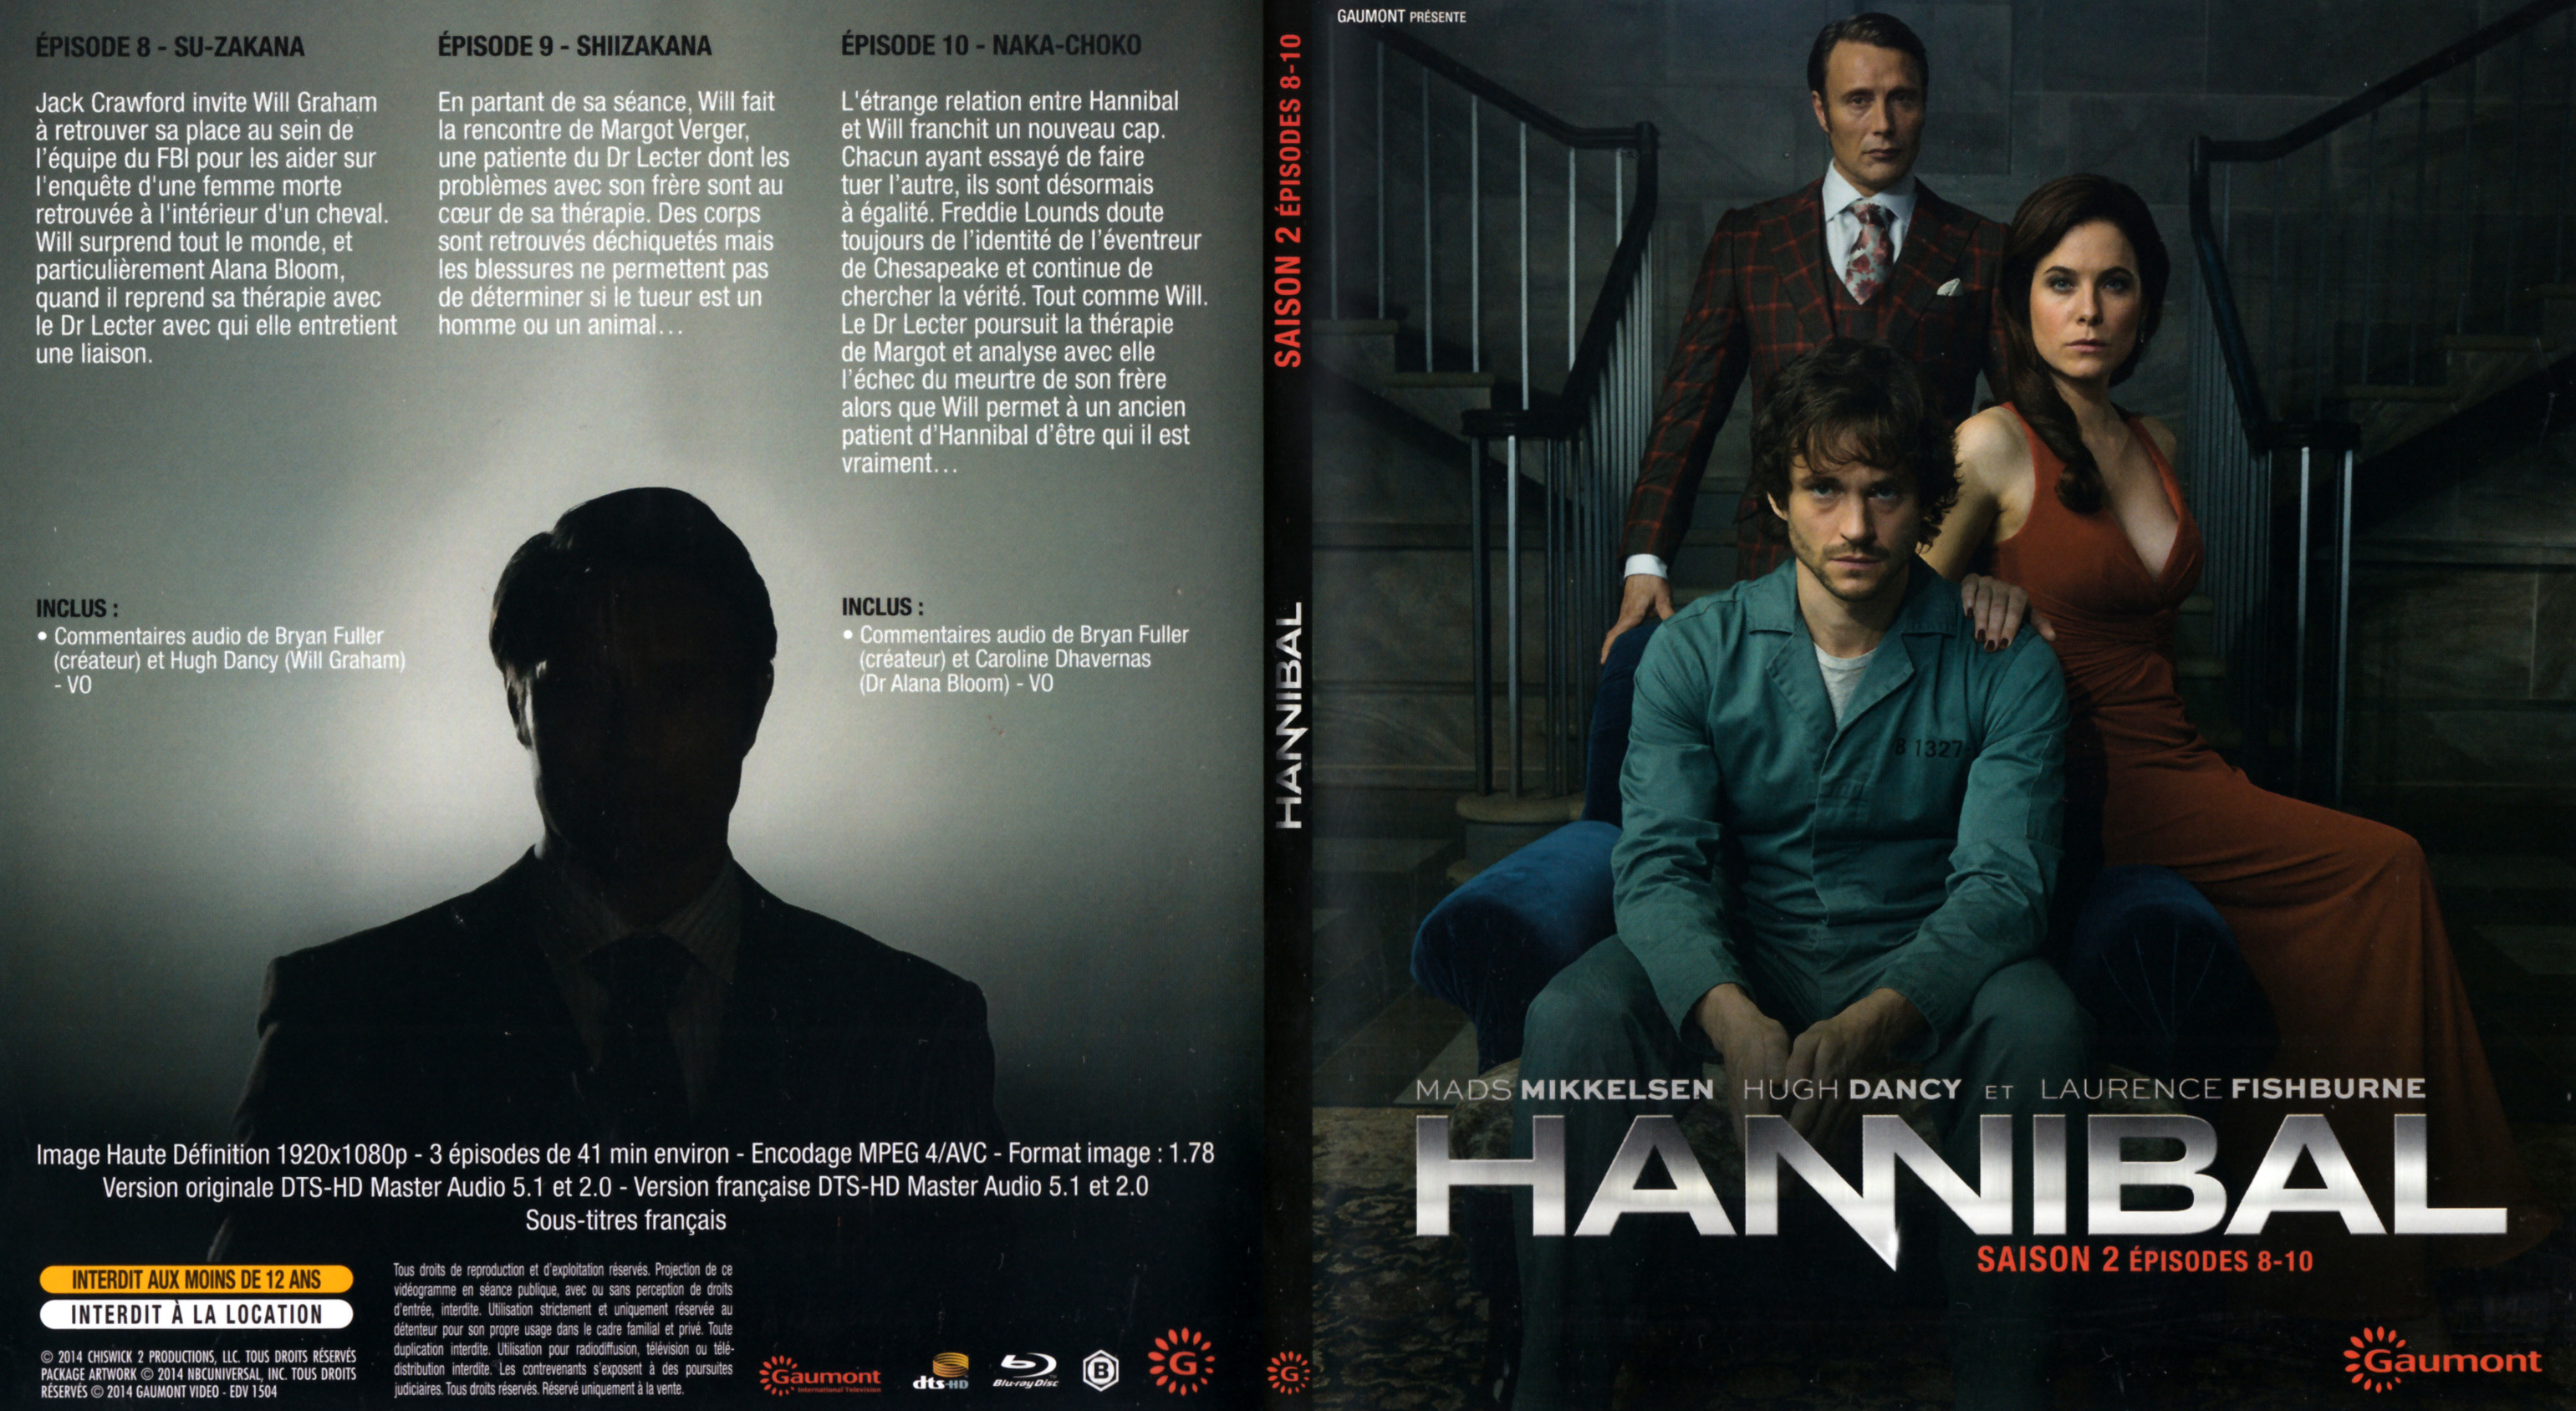 Jaquette DVD Hannibal Saison 2 DISC 3 (BLU-RAY)